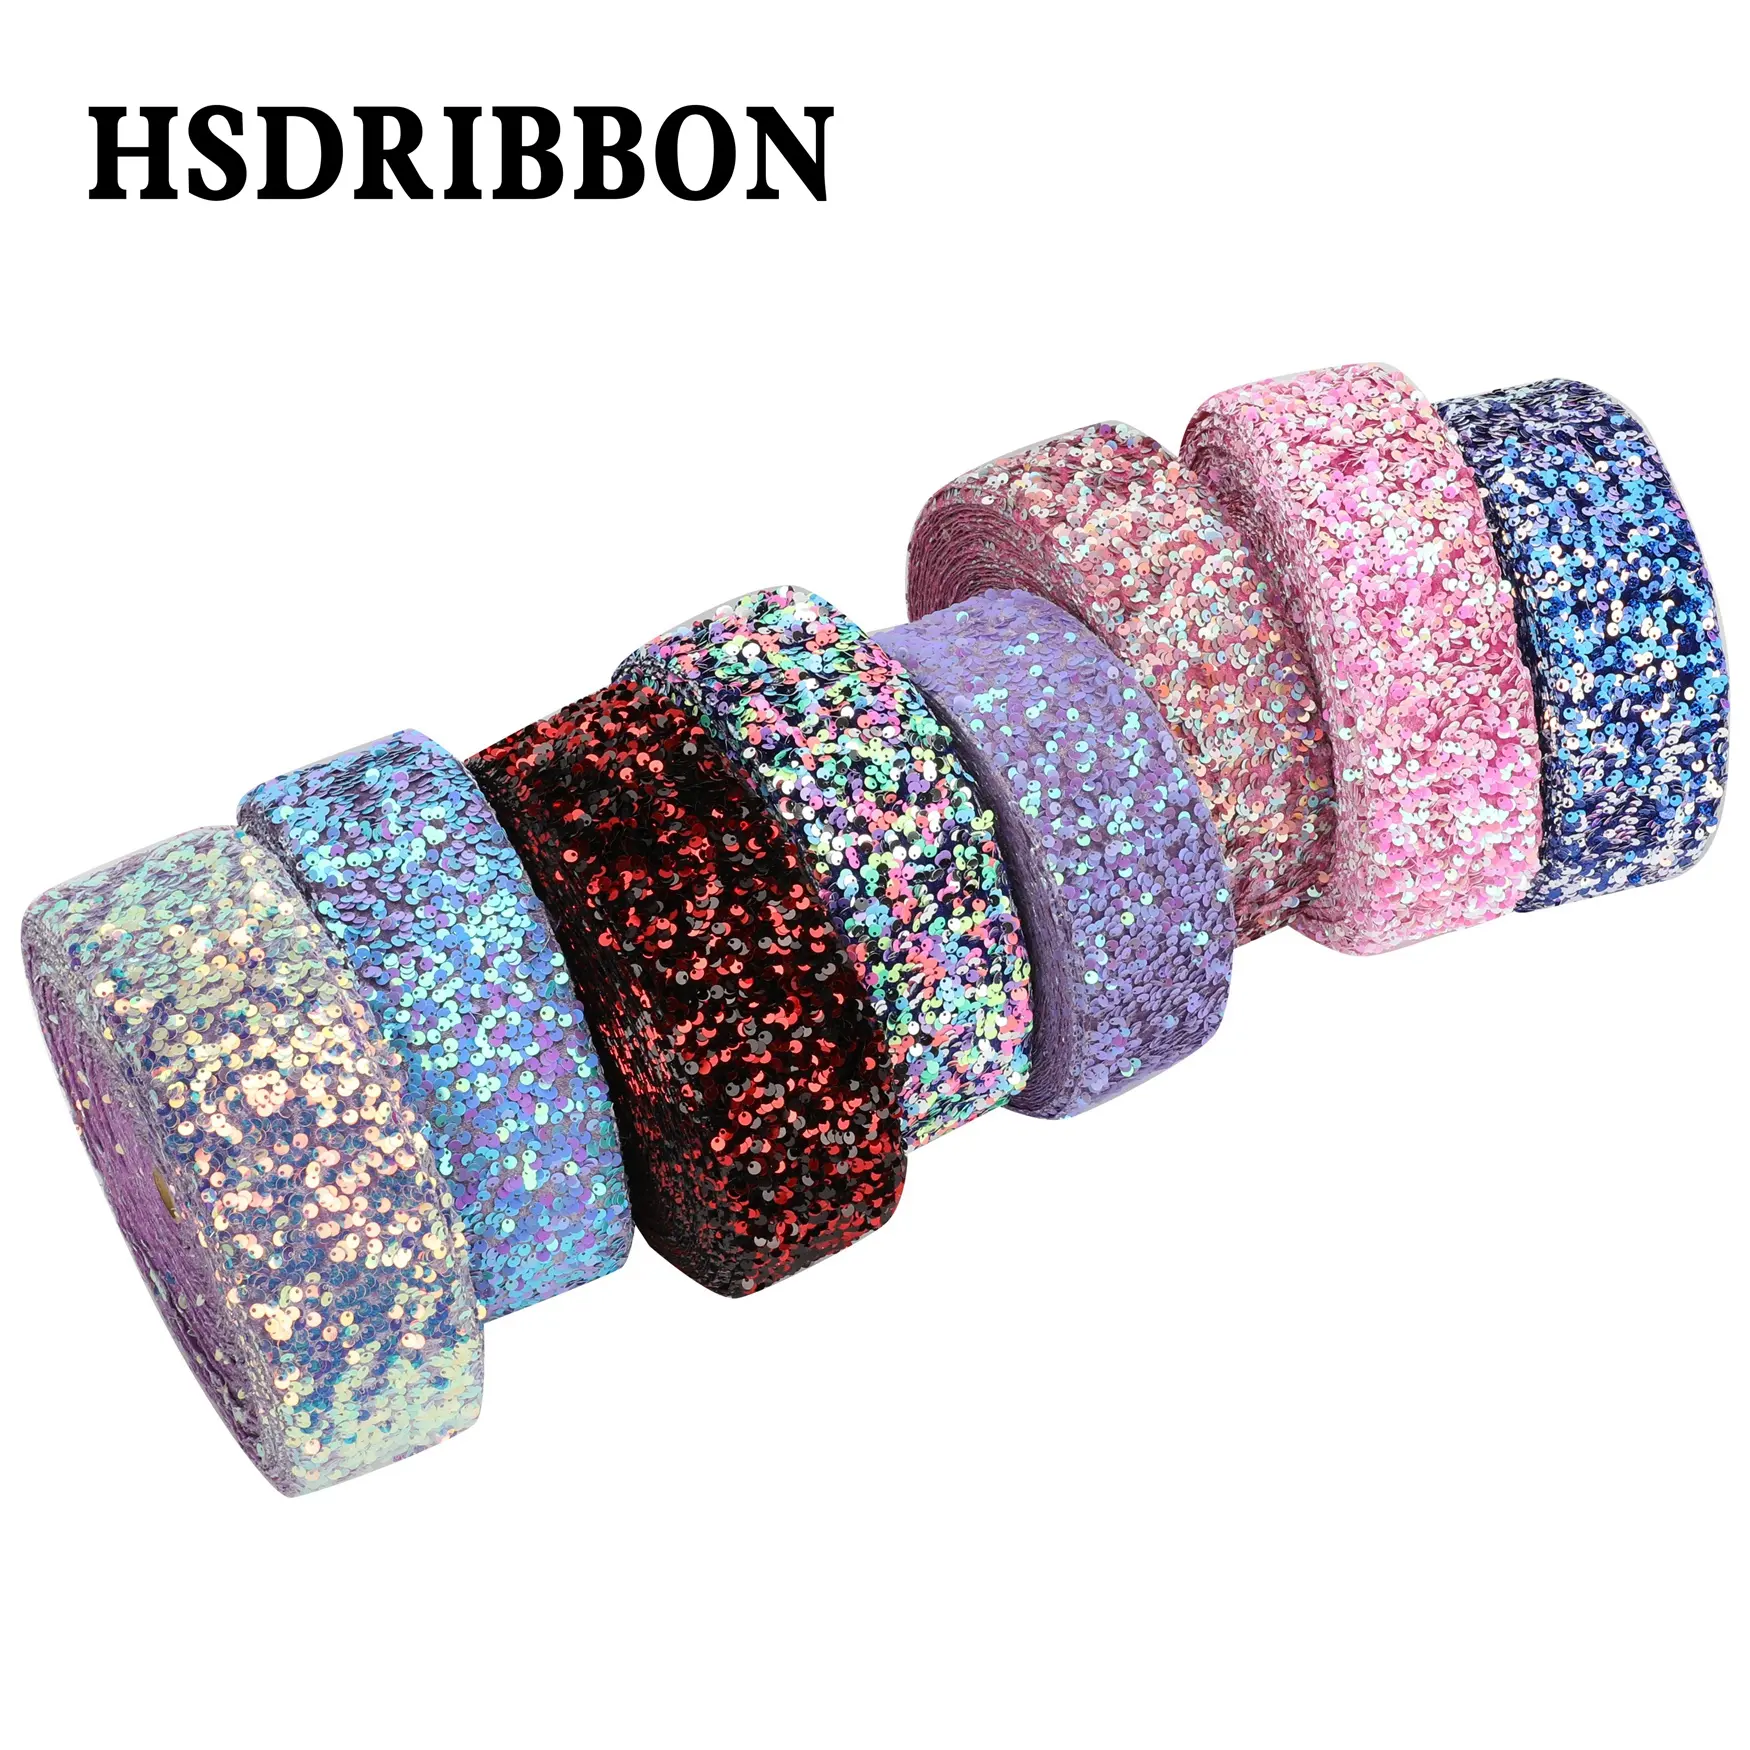 HSDRIBBON Listones 3 pulgadas 75mm HSD-genuino colorido de terciopelo lentejuelas cinta